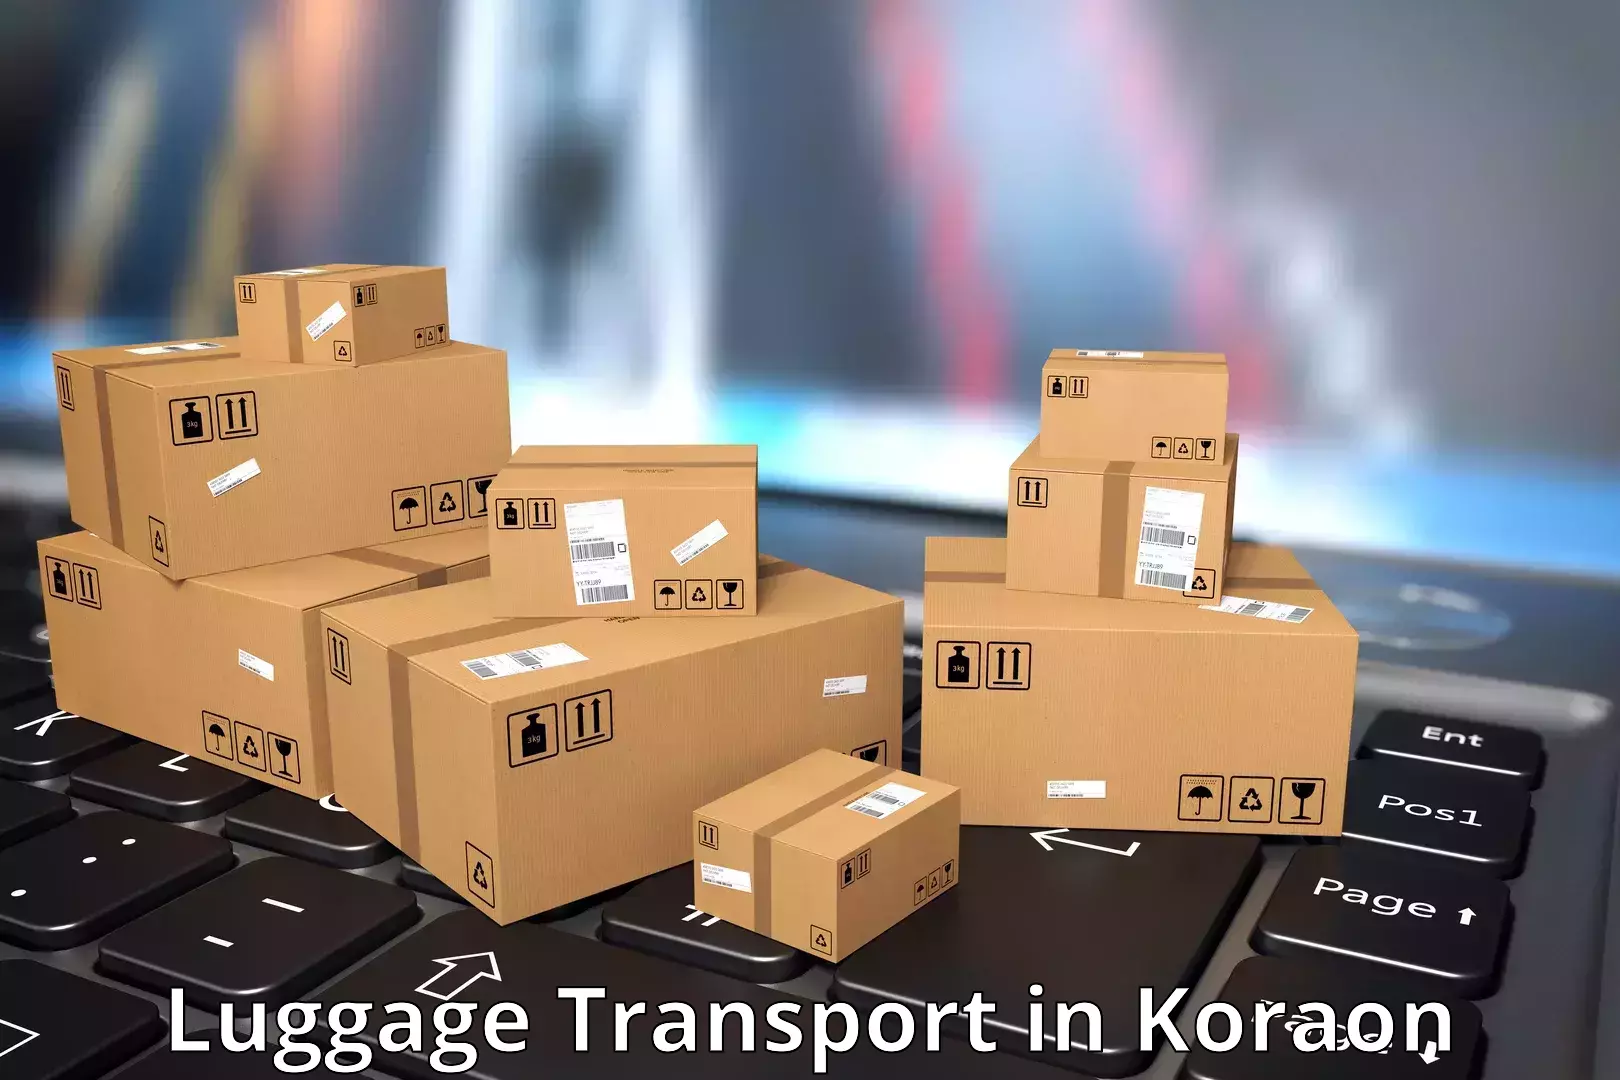 Domestic luggage transport in Koraon